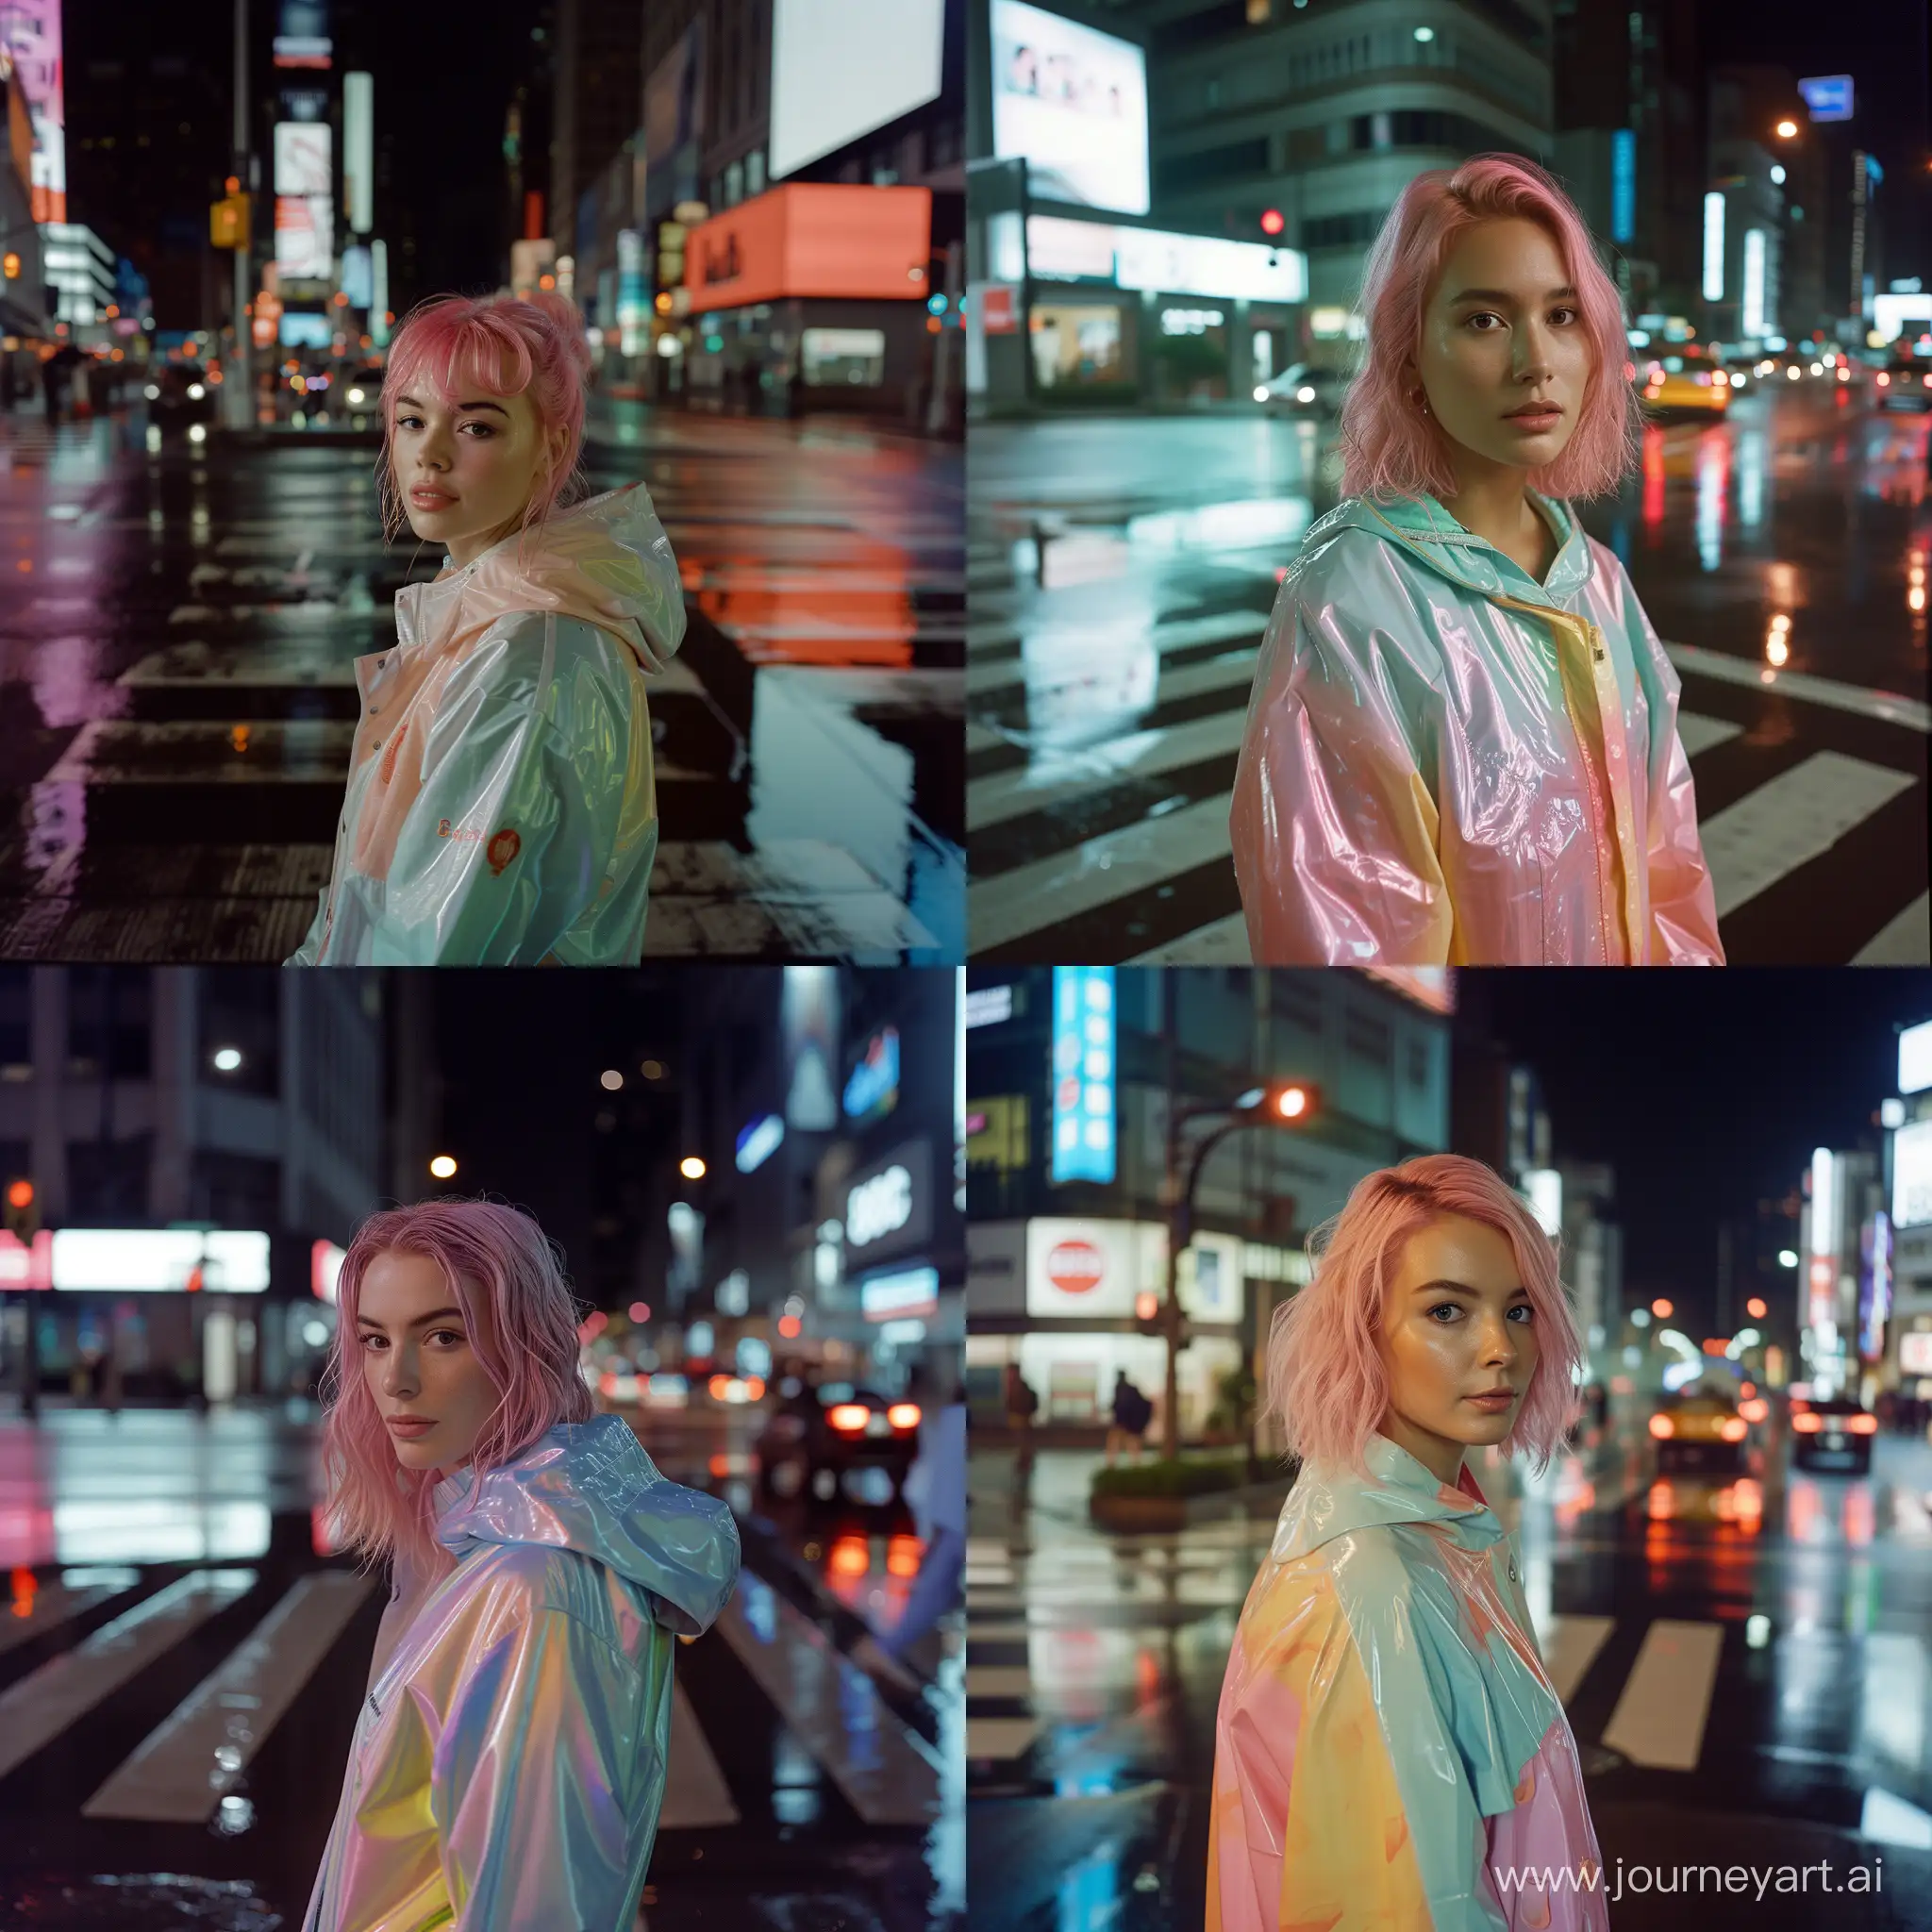 Vibrant-Night-Portrait-PinkHaired-Woman-in-Pastel-Raincoat-at-Crosswalk